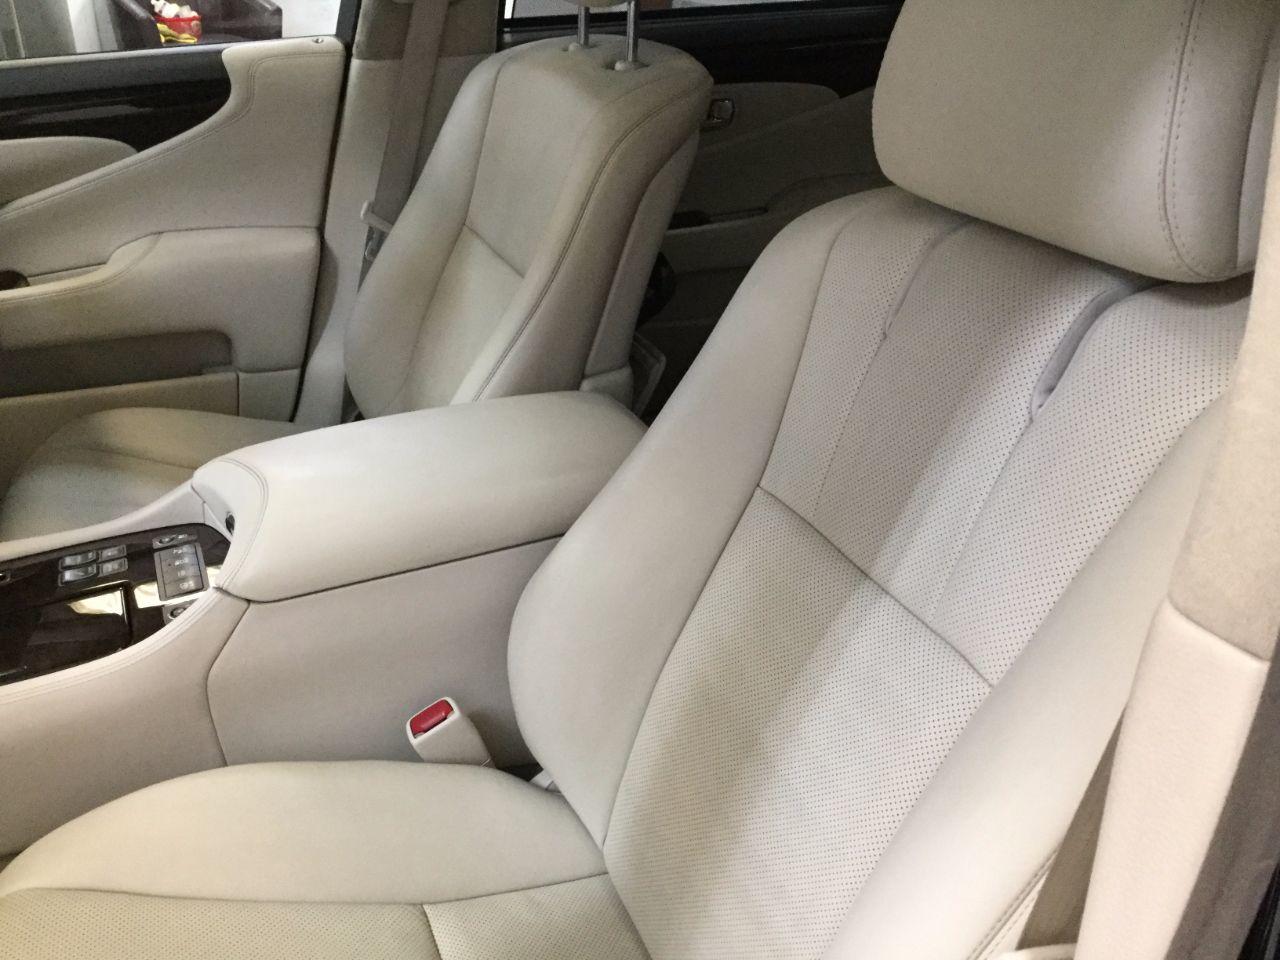 Lexus LS 600h L 5.0 V8 4dr CVT Auto [Rear Relaxation Pack] Saloon Hybrid Windsor Blue Metallic